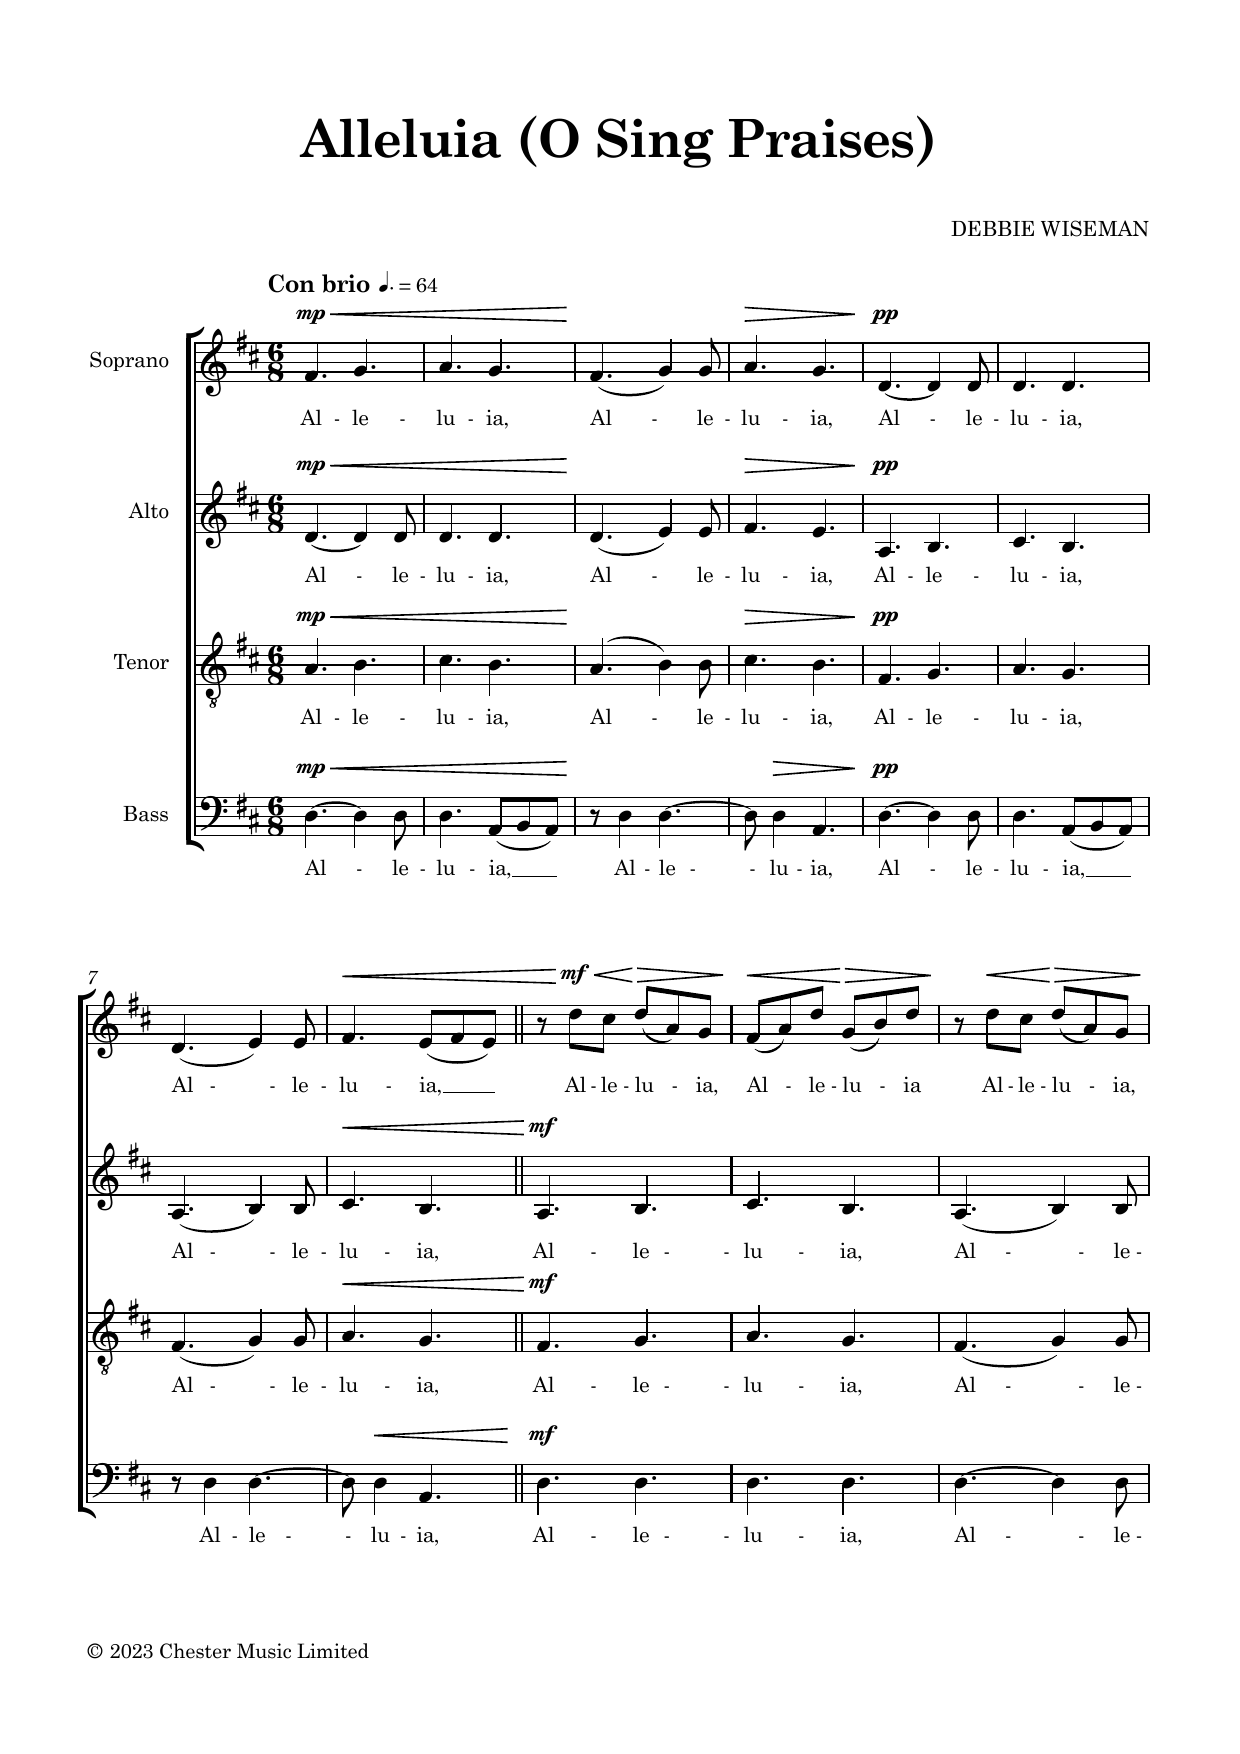 Debbie Wiseman Alleluia (O Sing Praises) sheet music notes and chords arranged for SATB Choir